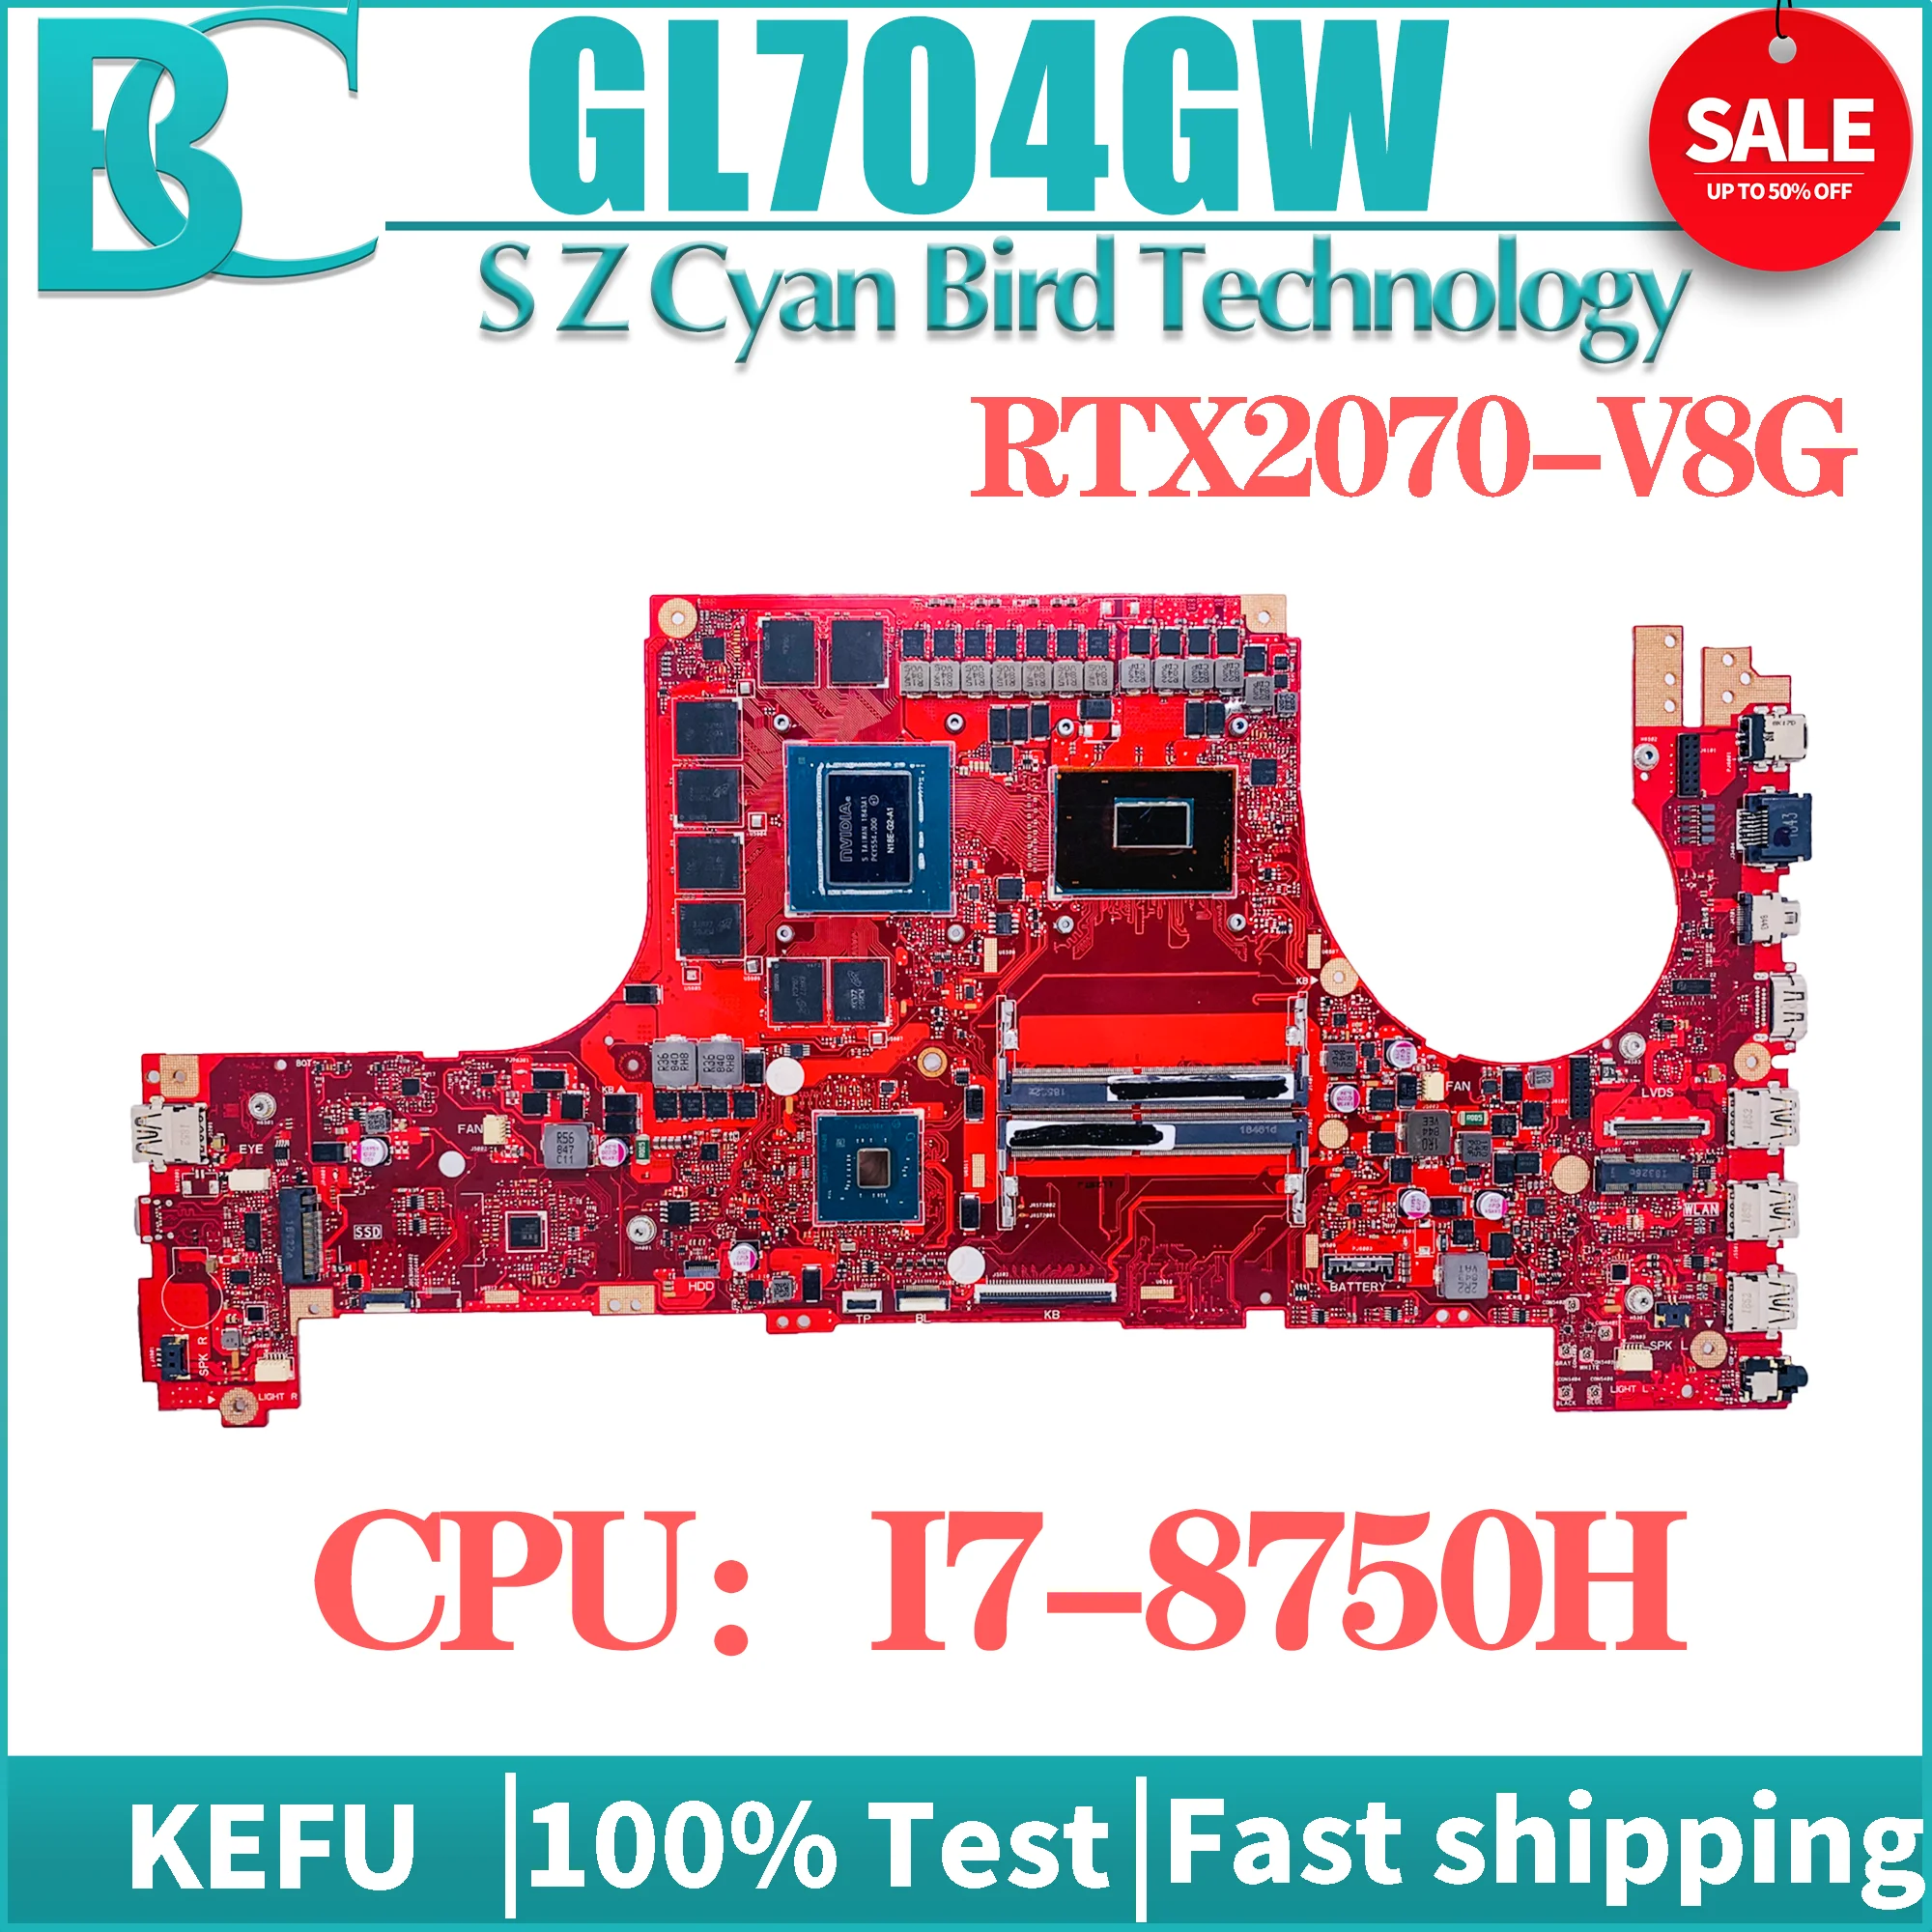 

KEFU Notebook Mainboard For ASUS GL704GW GL704GV GL704GM GL704G MW704G S7C Laptop Motherboard I5 I7 GTX1060 RTX2060 RTX2070 DDR4